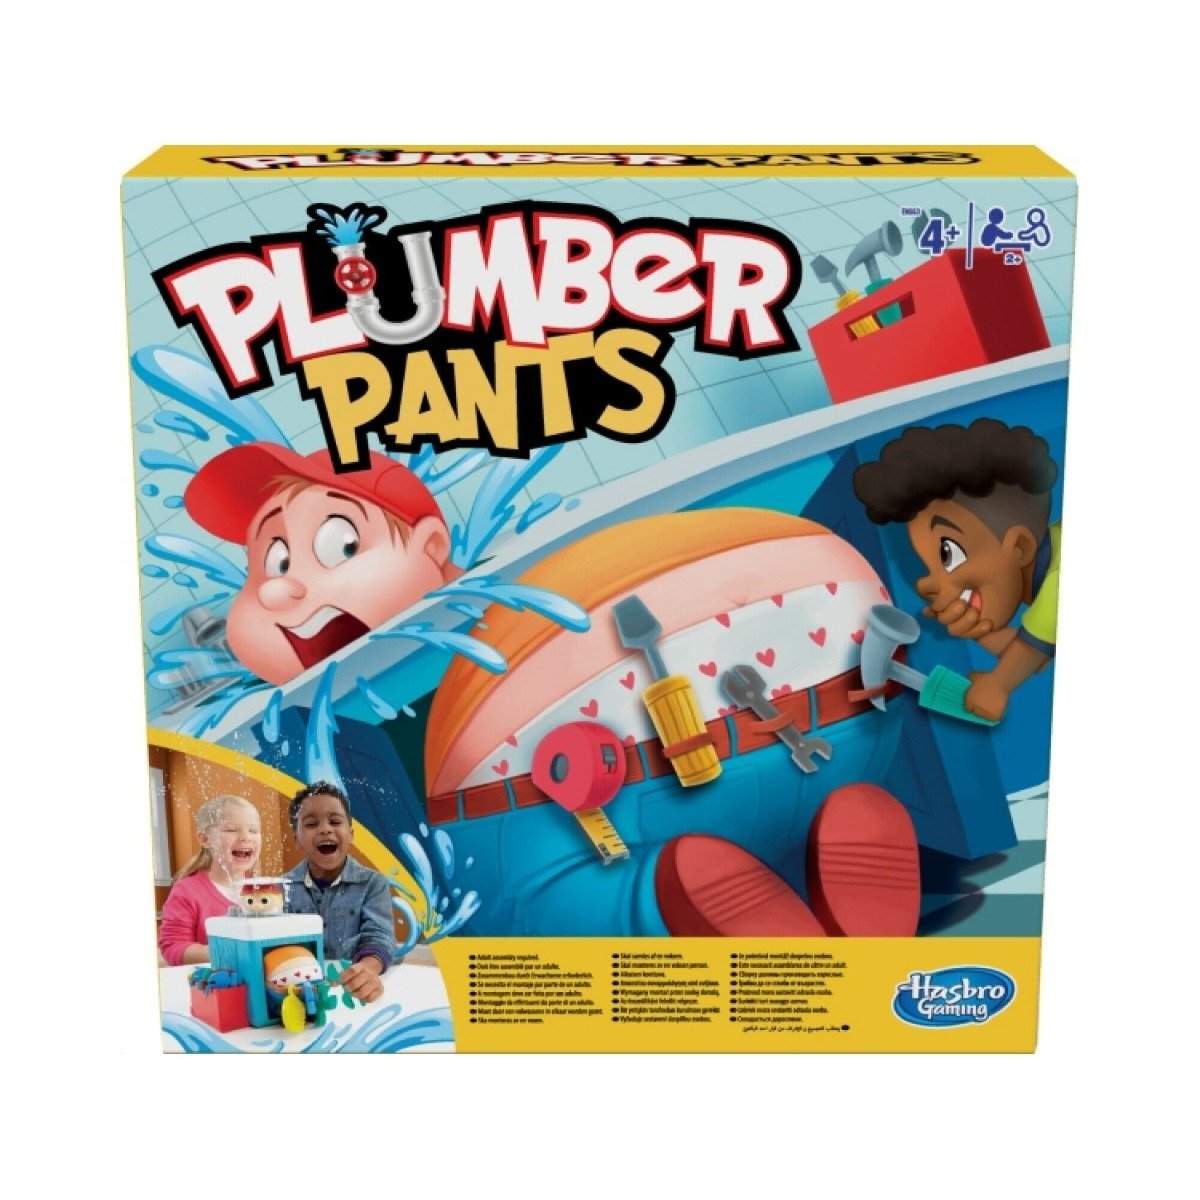 Joc Plumber Pants Hasbro Games